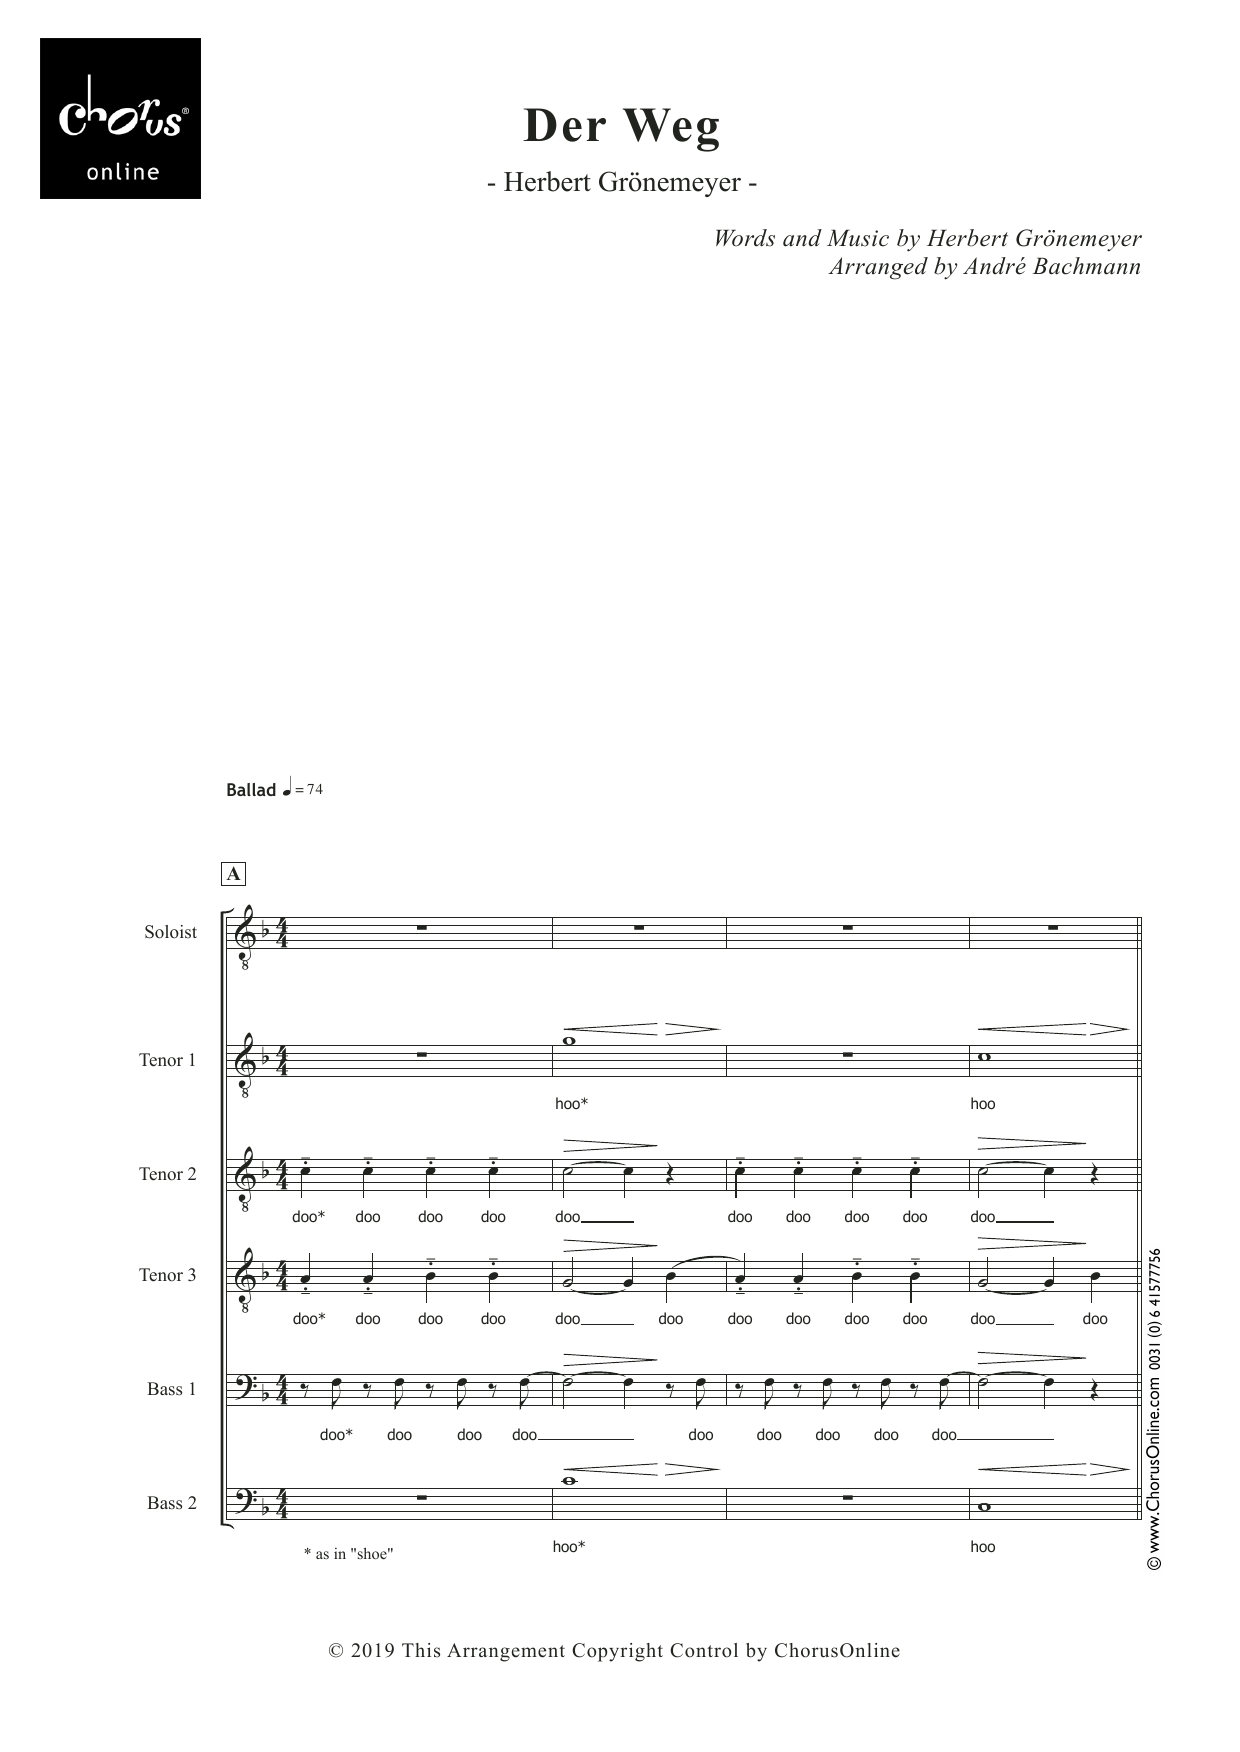 Herbert Grönemeyer Der Weg (arr. André Bachmann) sheet music notes printable PDF score